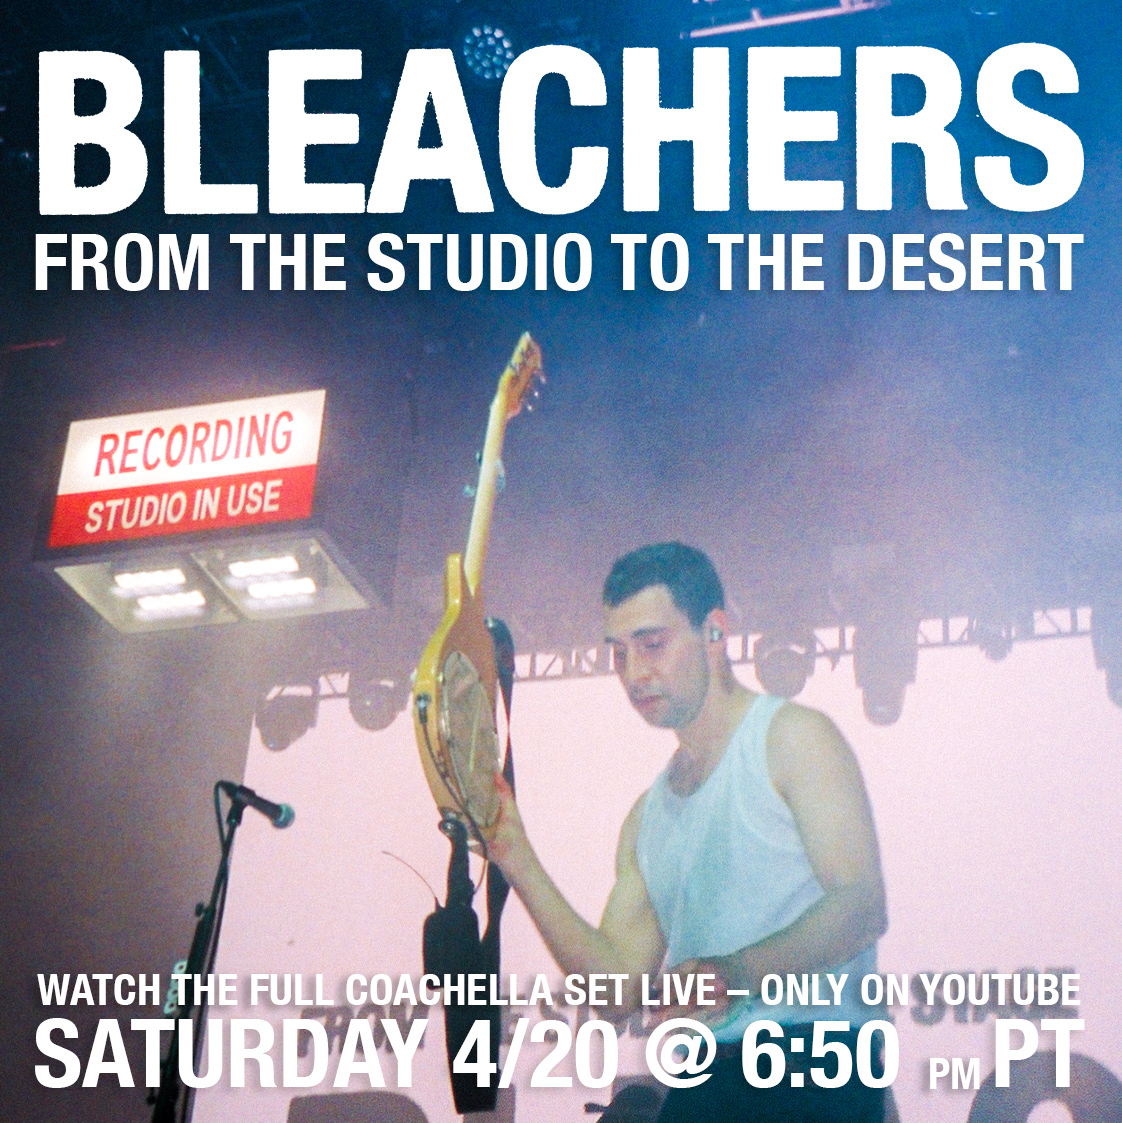 bleachers return to the desert – tomorrow 6:50 pm mojave tent full @coachella set will be live streamed on @youtube youtube.com/watch?v=qwkyHi…